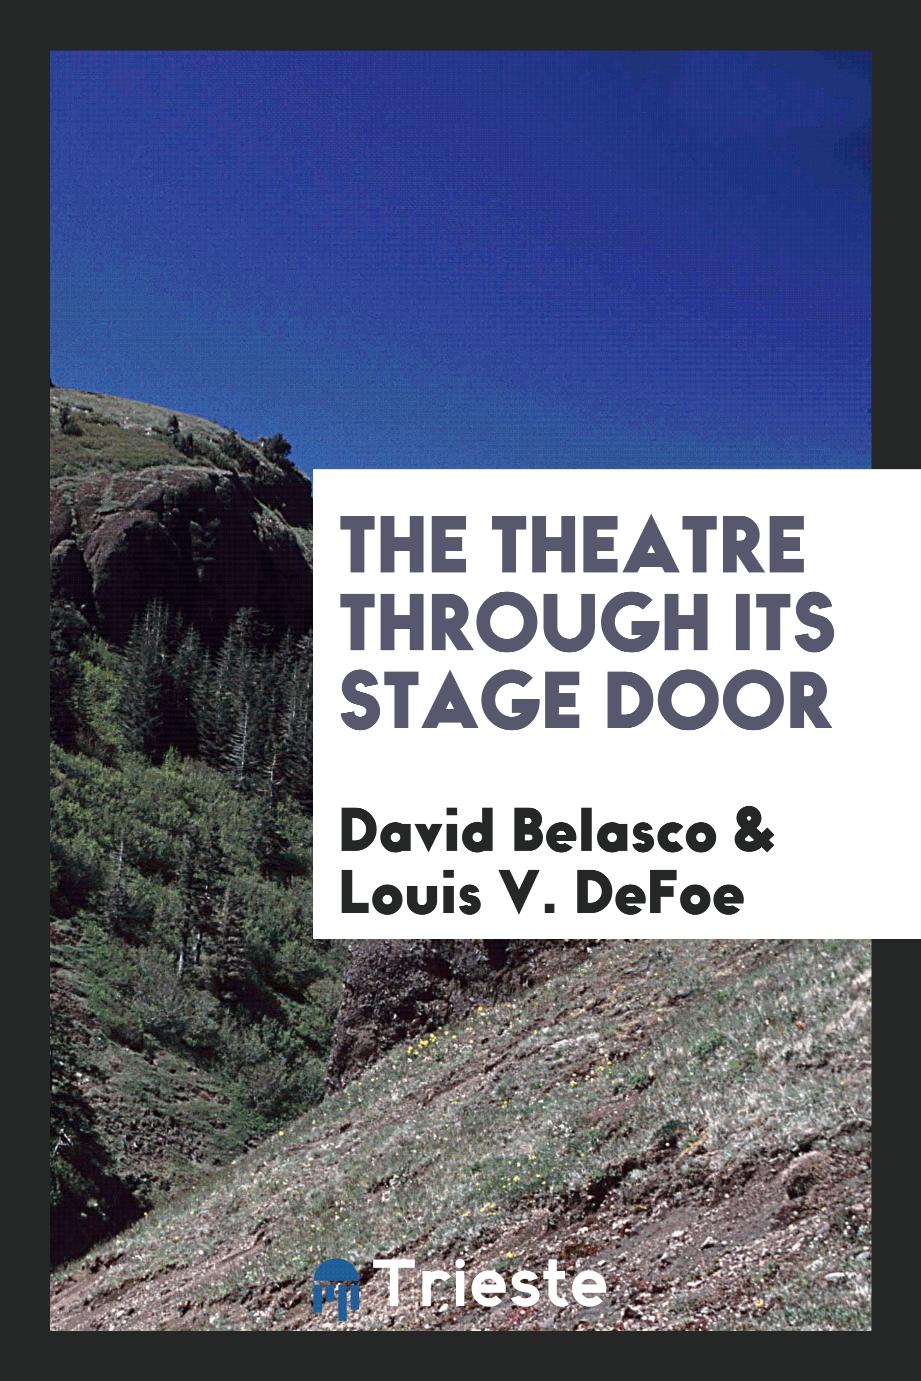 The theatre through its stage door